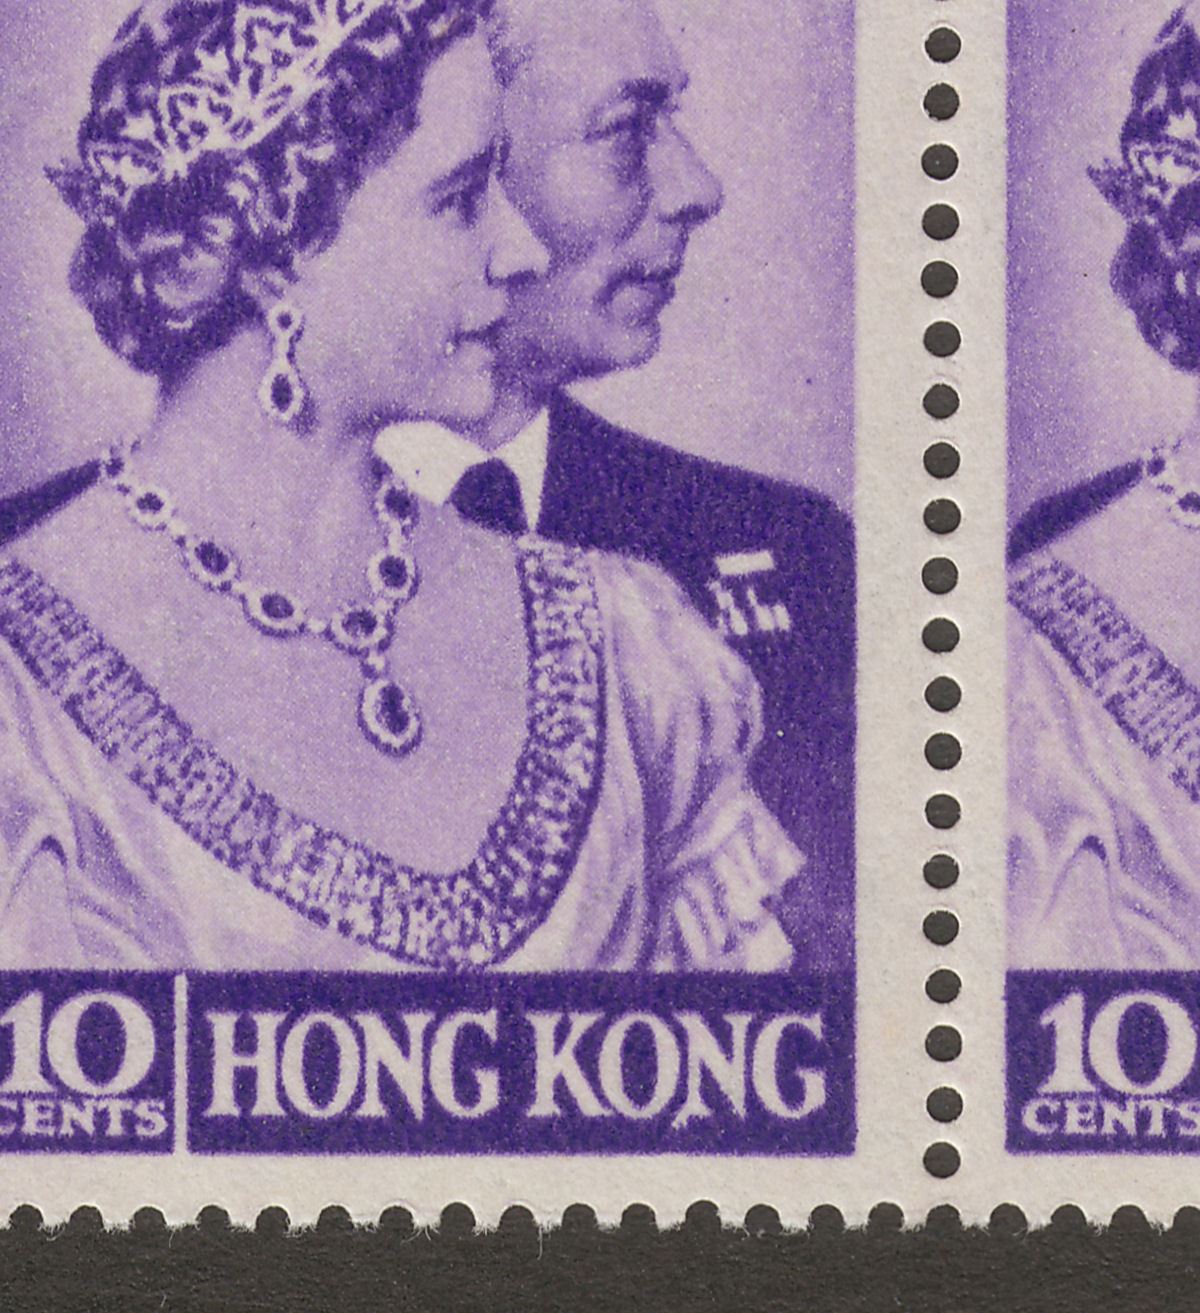 Hong Kong 1948 KGVI RSW 10c Violet Block Mint w Variety Spur on N SG171a c£100+